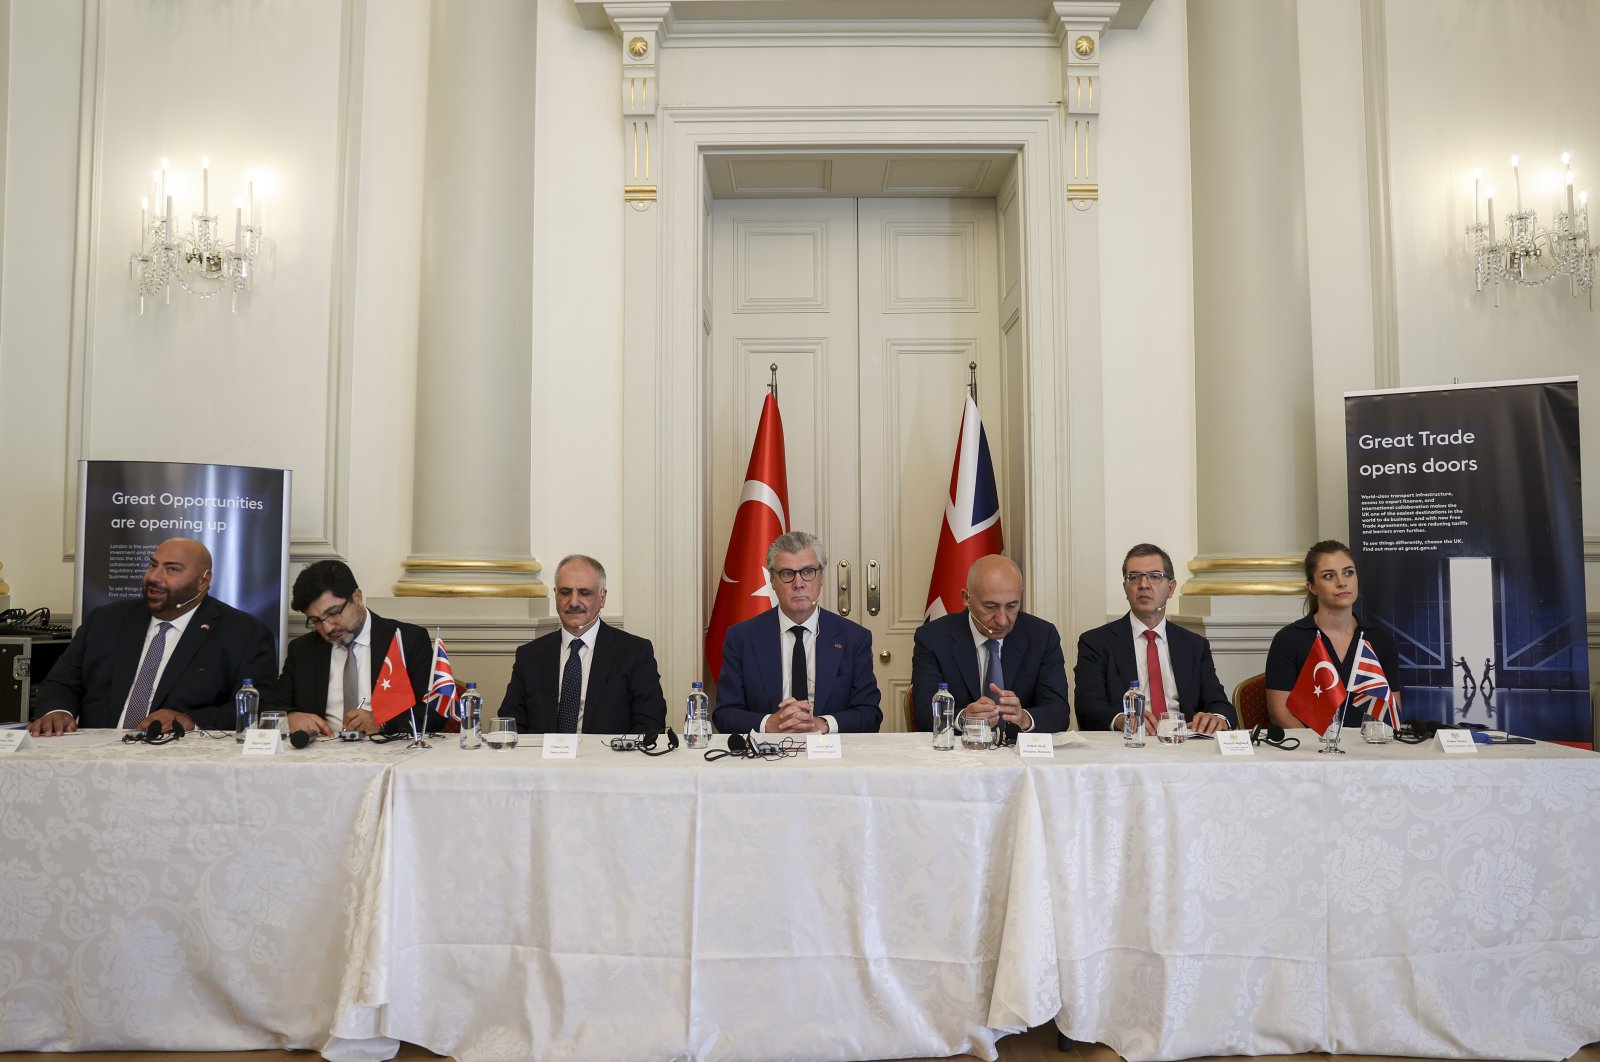 Inggris akan menyediakan pembiayaan 6 juta untuk kereta api berkecepatan tinggi baru Türkiye